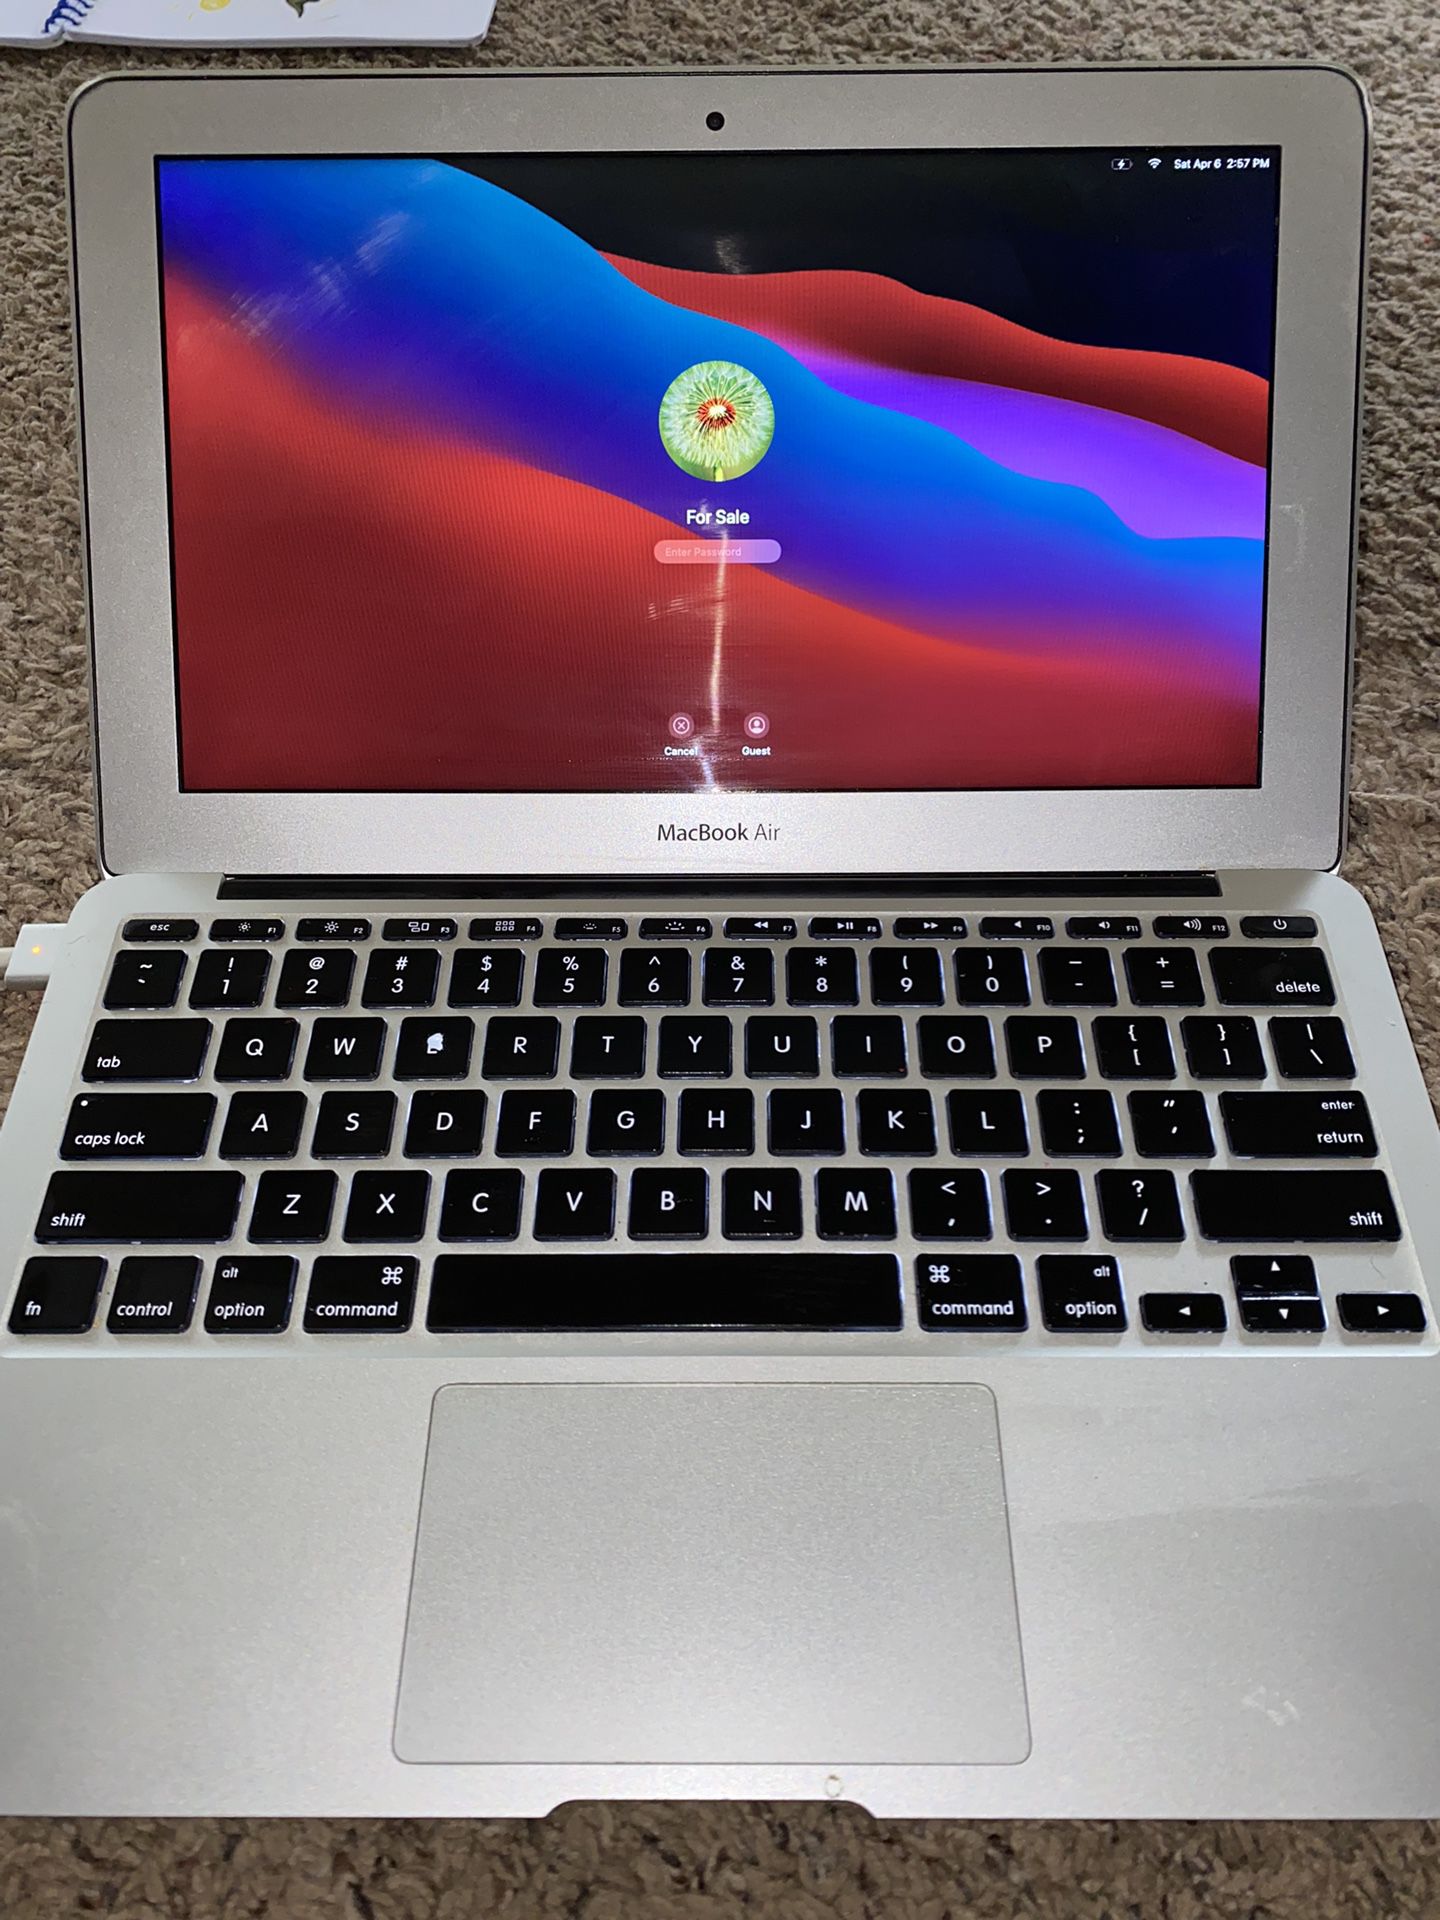 MacBook Air 11-inch, Mid 2013